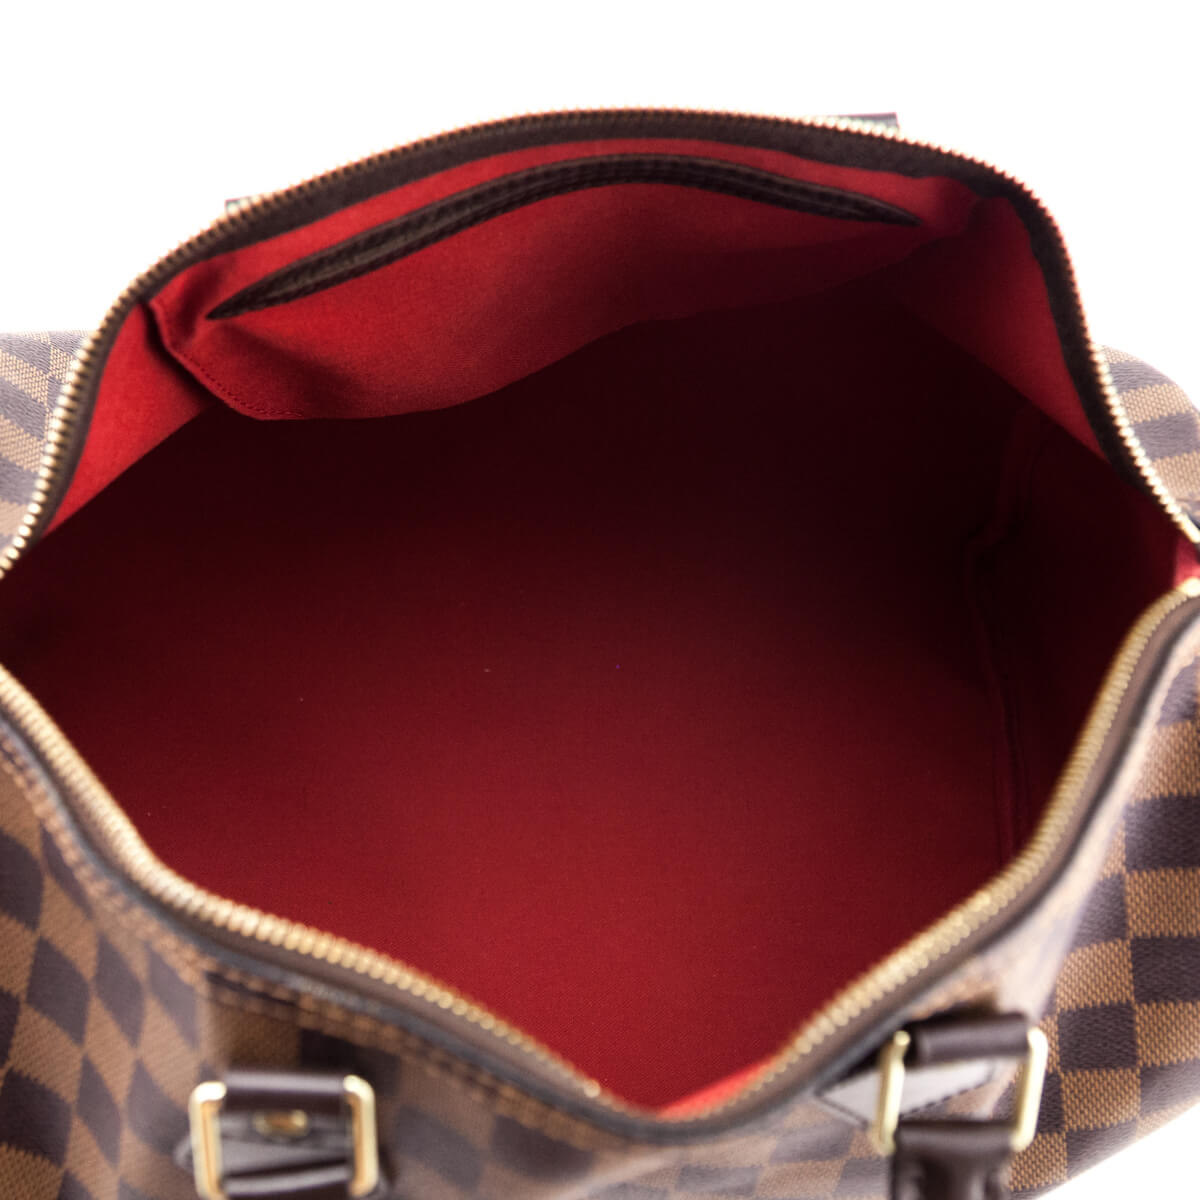 Louis Vuitton Damier Ebène Speedy 35 ○ Labellov ○ Buy and Sell